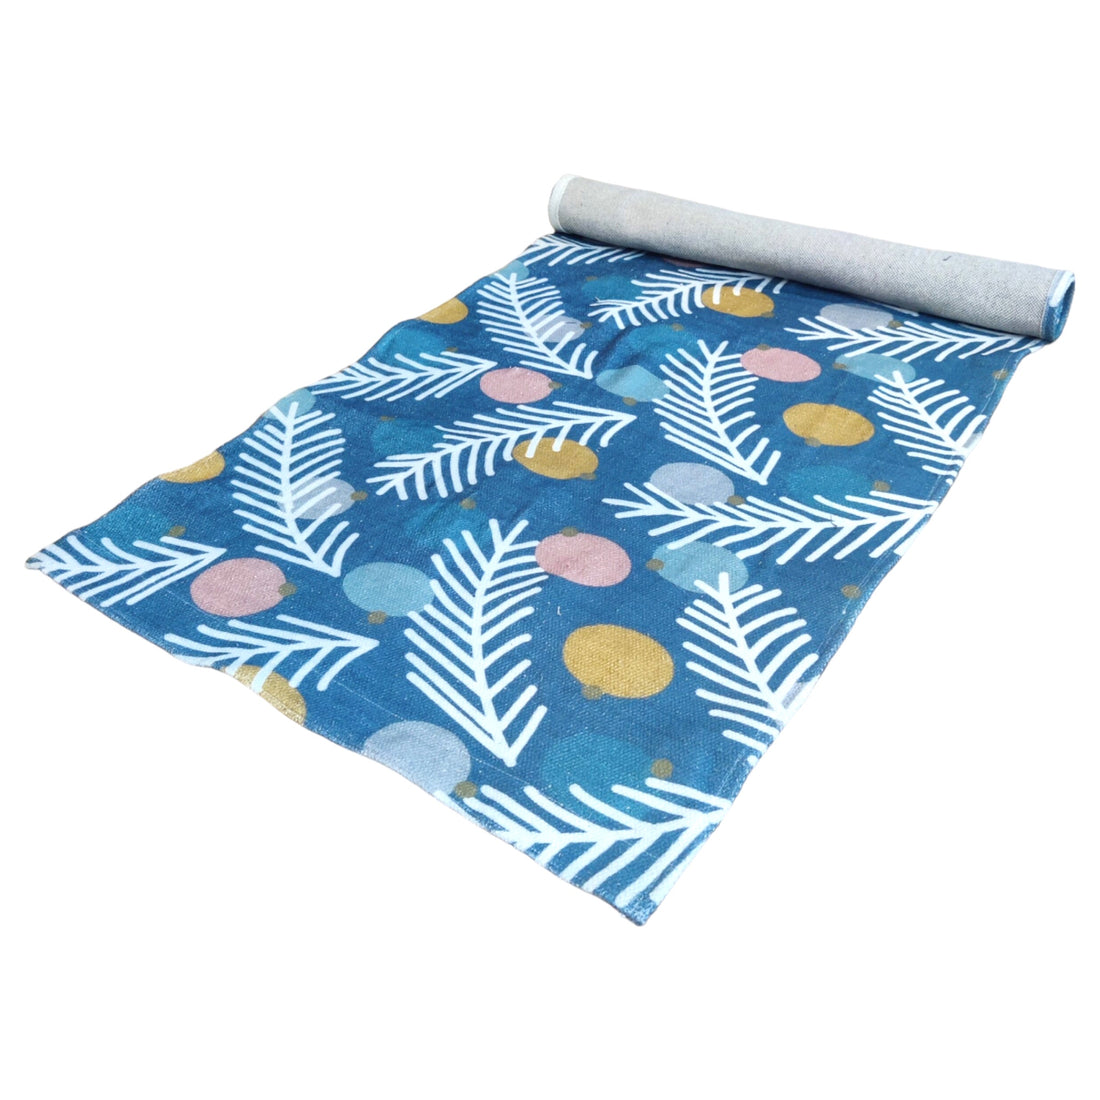 Handloom Cotton Blue Eco-Friendly Yoga Mat